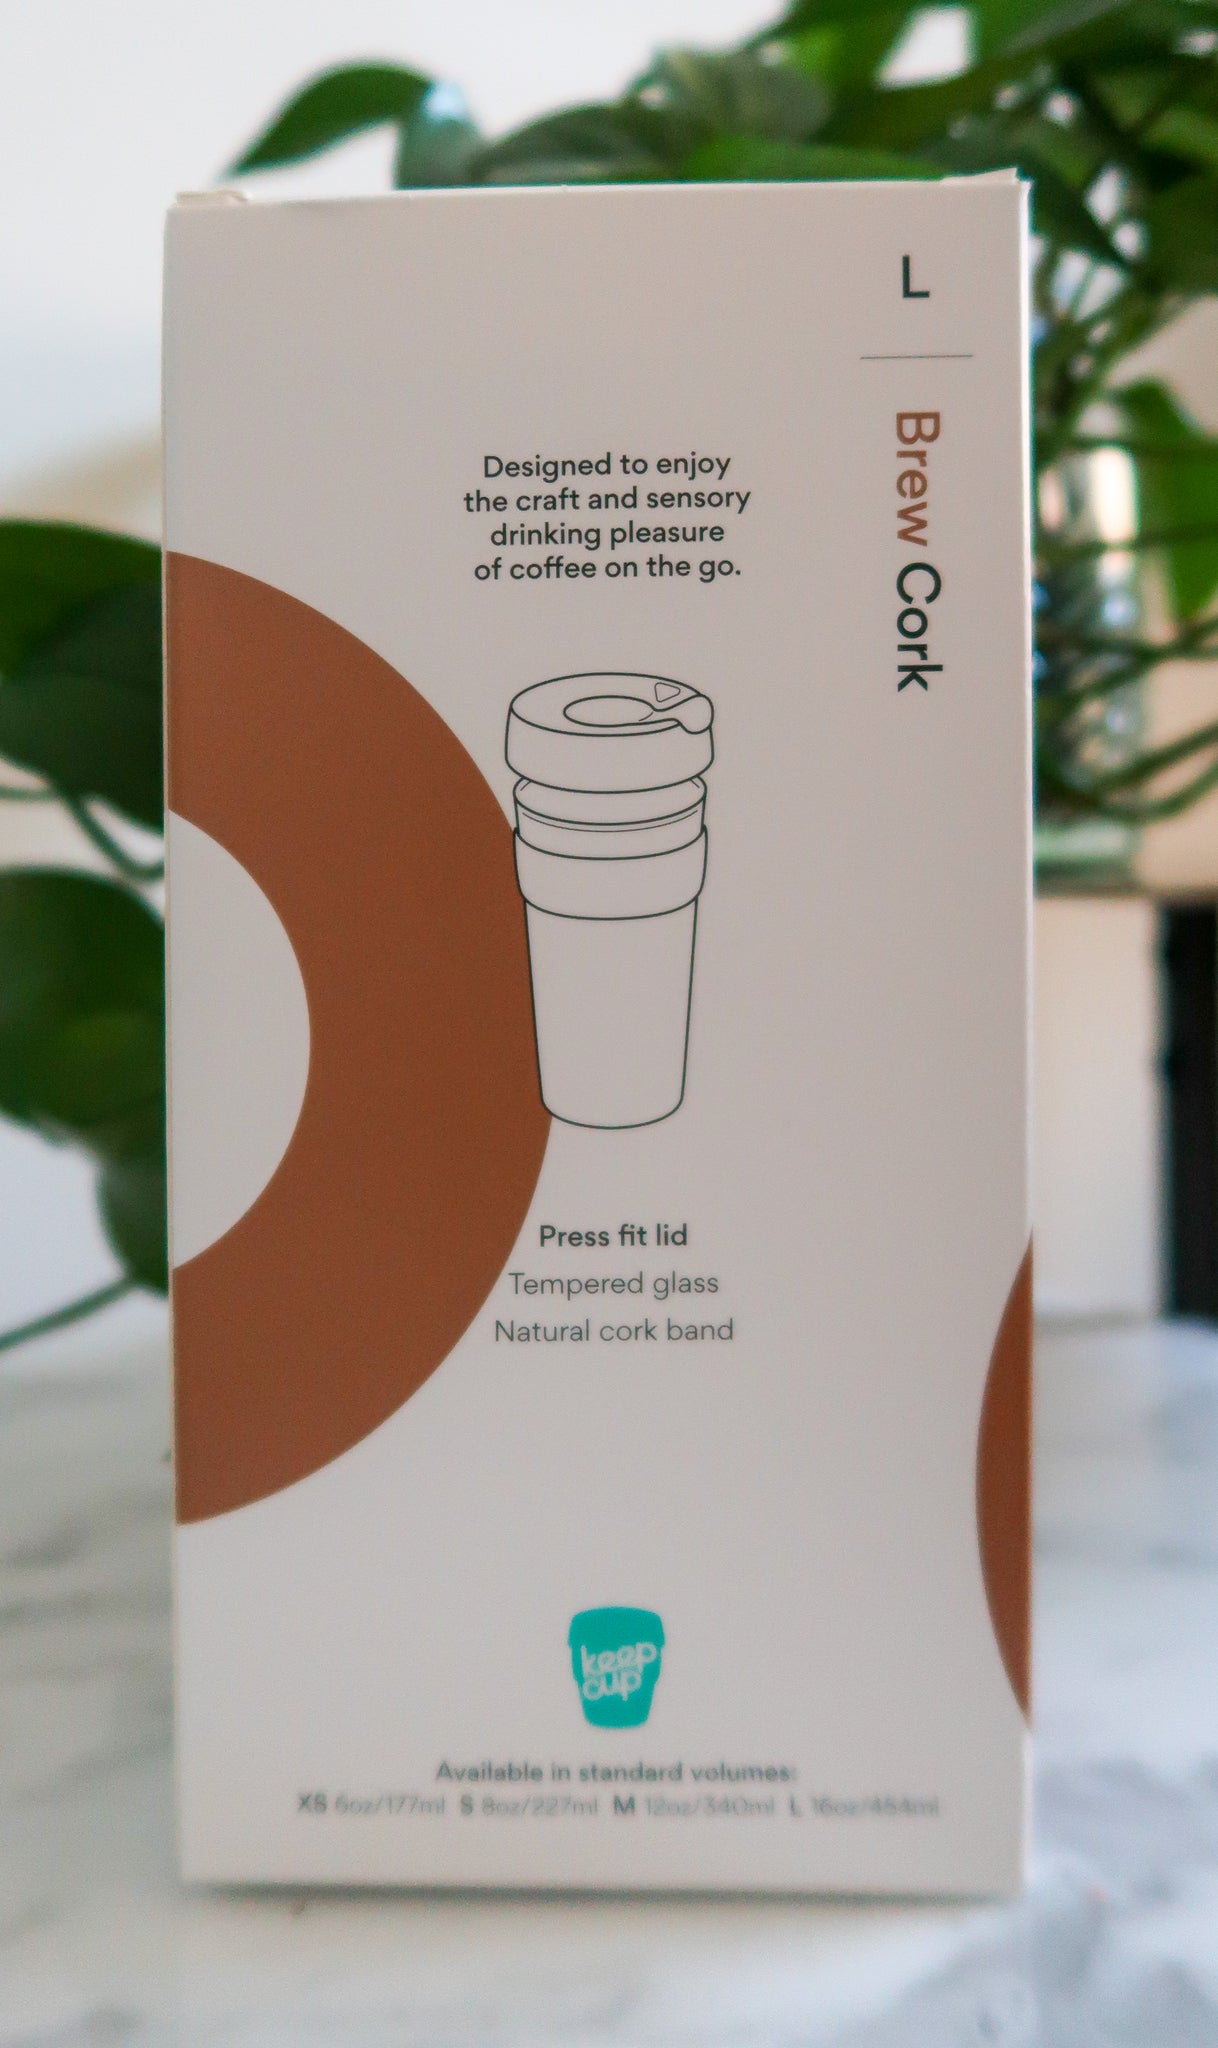 Keep Cup Reusable Coffee Cup - Cork – Simply Zero